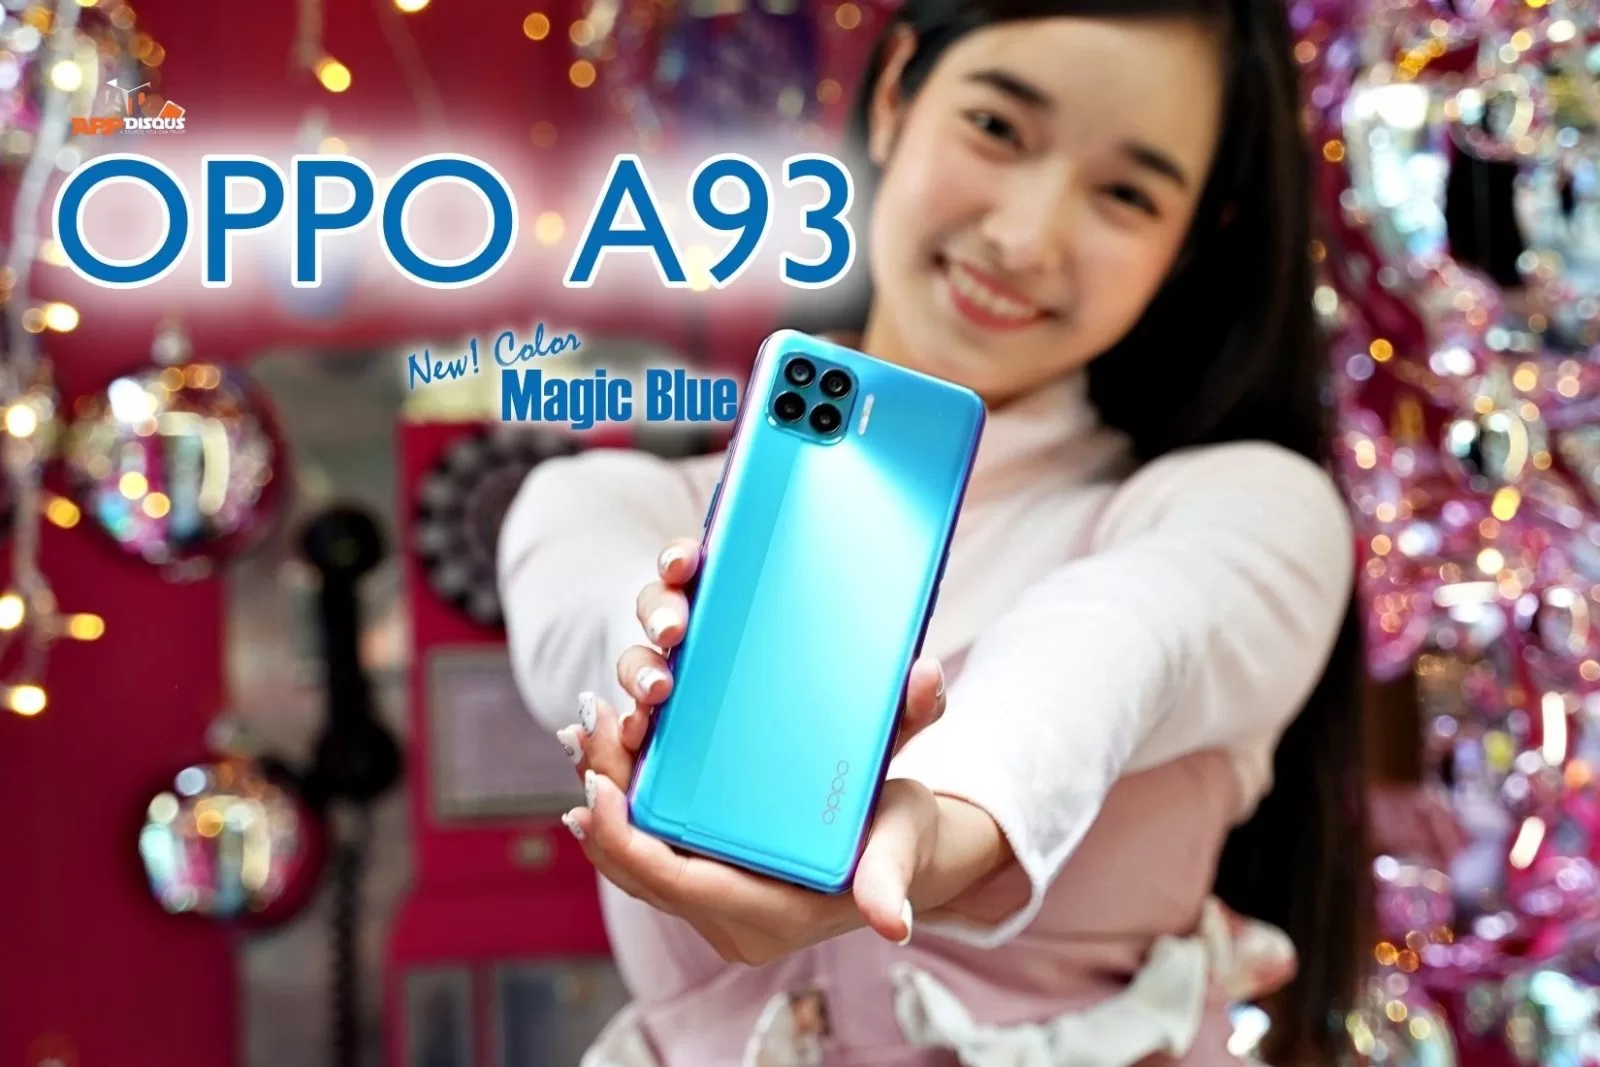 OPPO A93 Magic Blue 15 | A93 | OPPO A93 สีใหม่! Magic Blue สมาร์ทโฟนดีไซน์สวย เล่นสนุก พร้อมของแถมช่วงปีใหม่ คุ้มสุด!